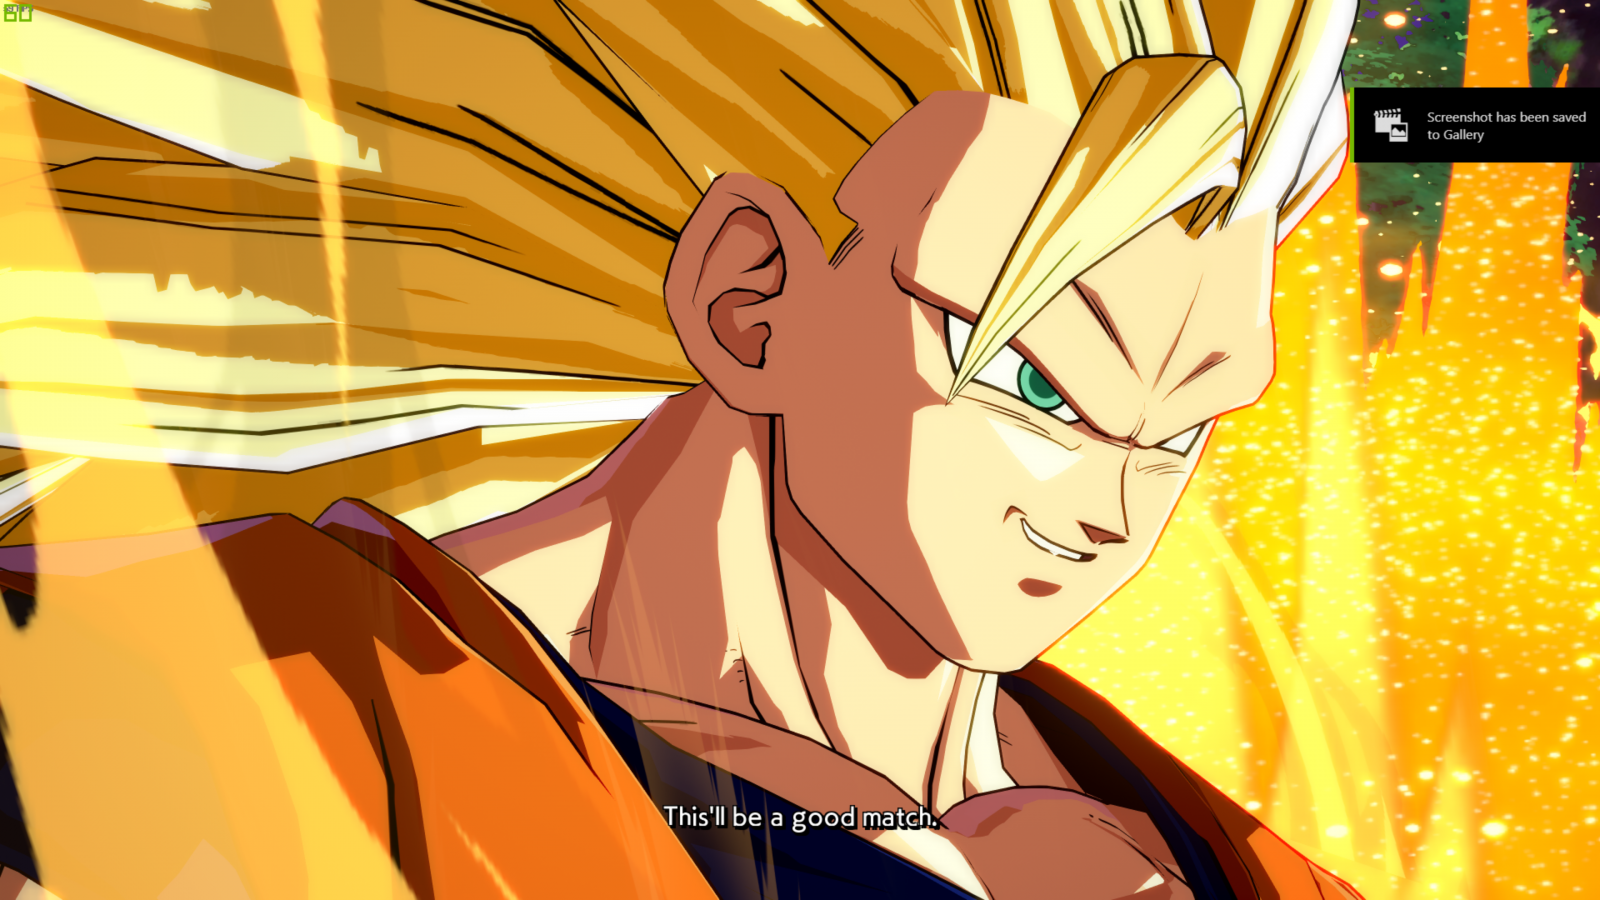 Super Saiyan 3 Goku with facial animations and hair movement